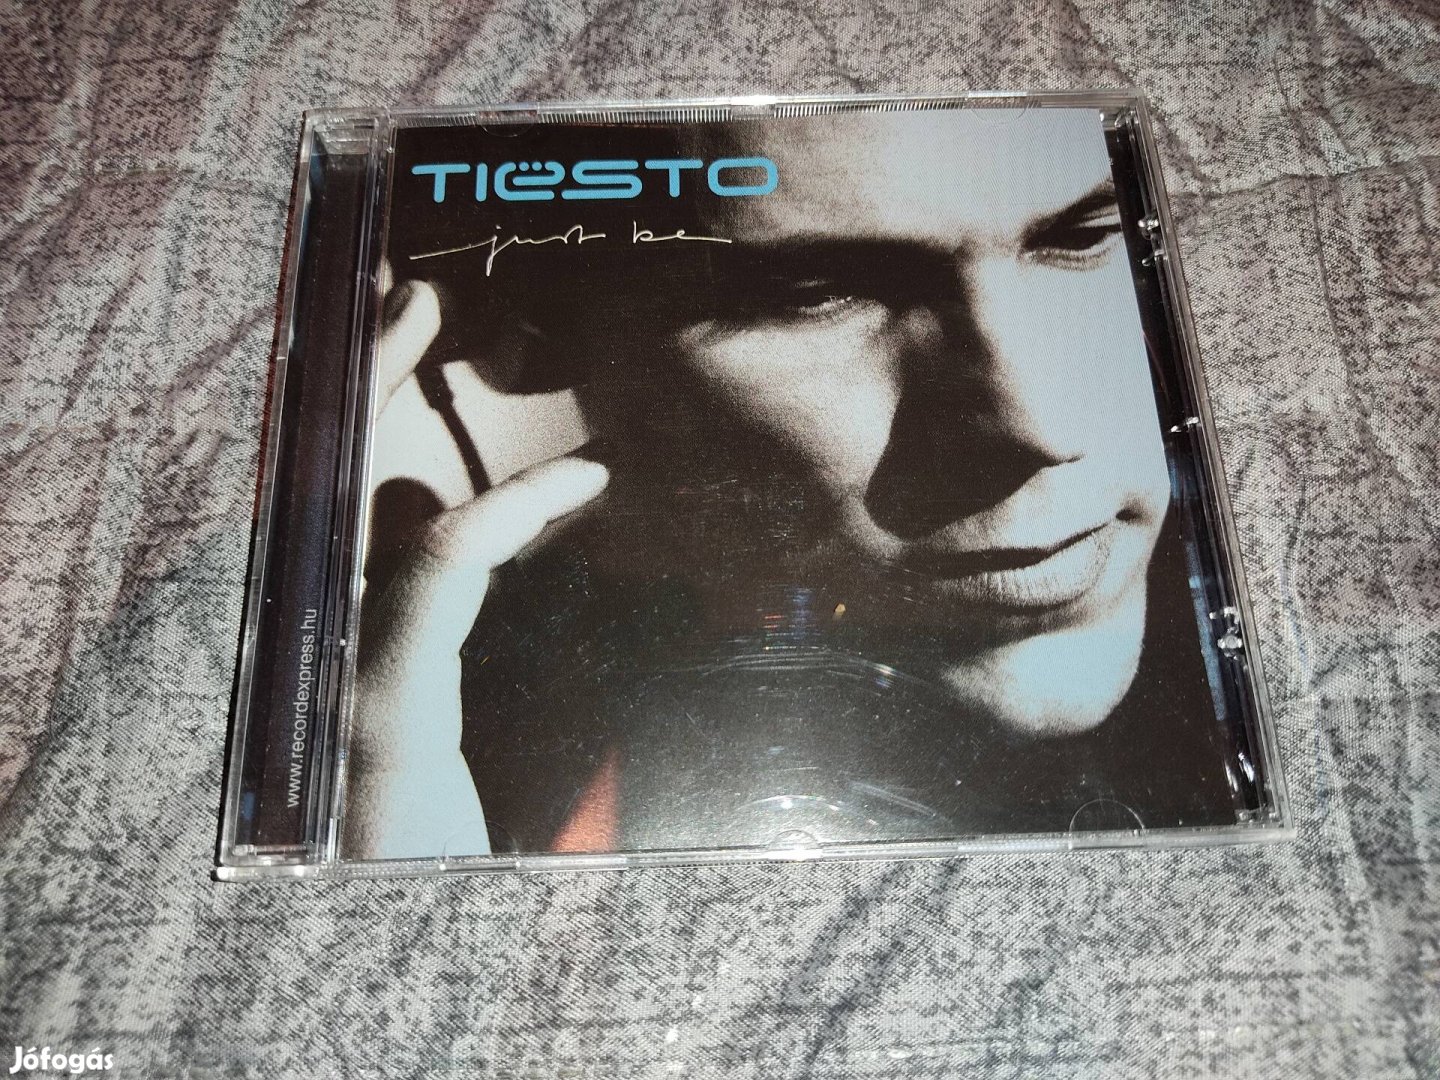 Tiesto - Just Be CD 